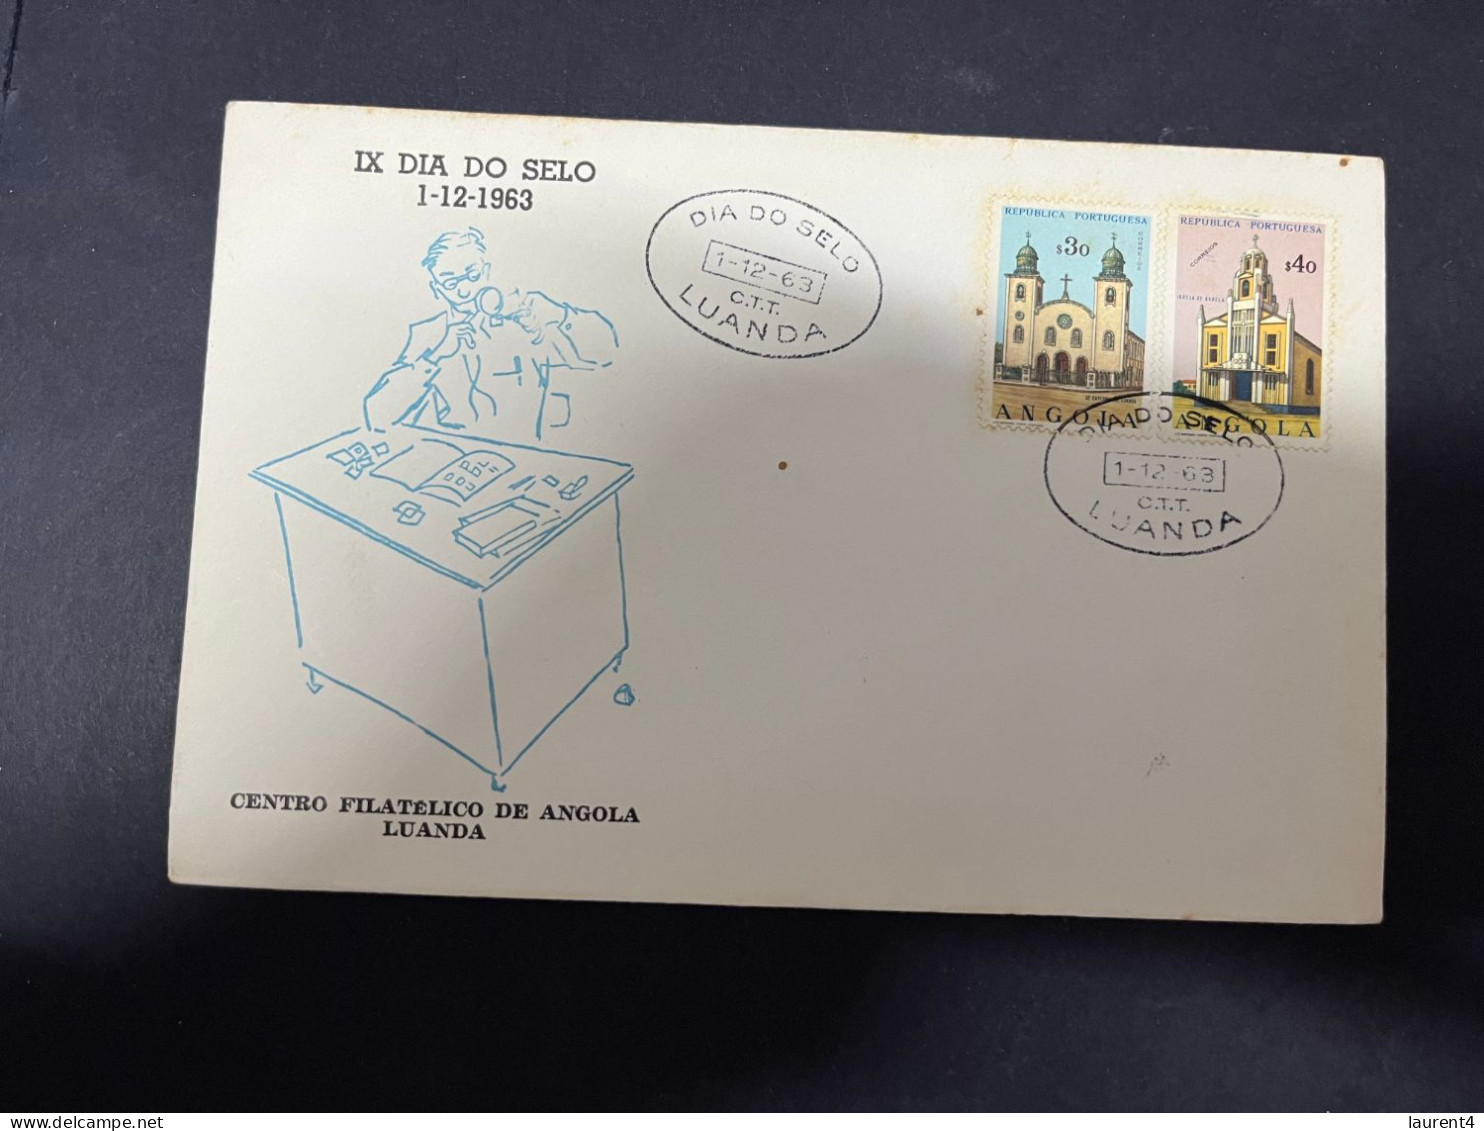 17-5-2024 (5 Z 24) ANGOLA FDC - Stamp Day 1963 - Angola